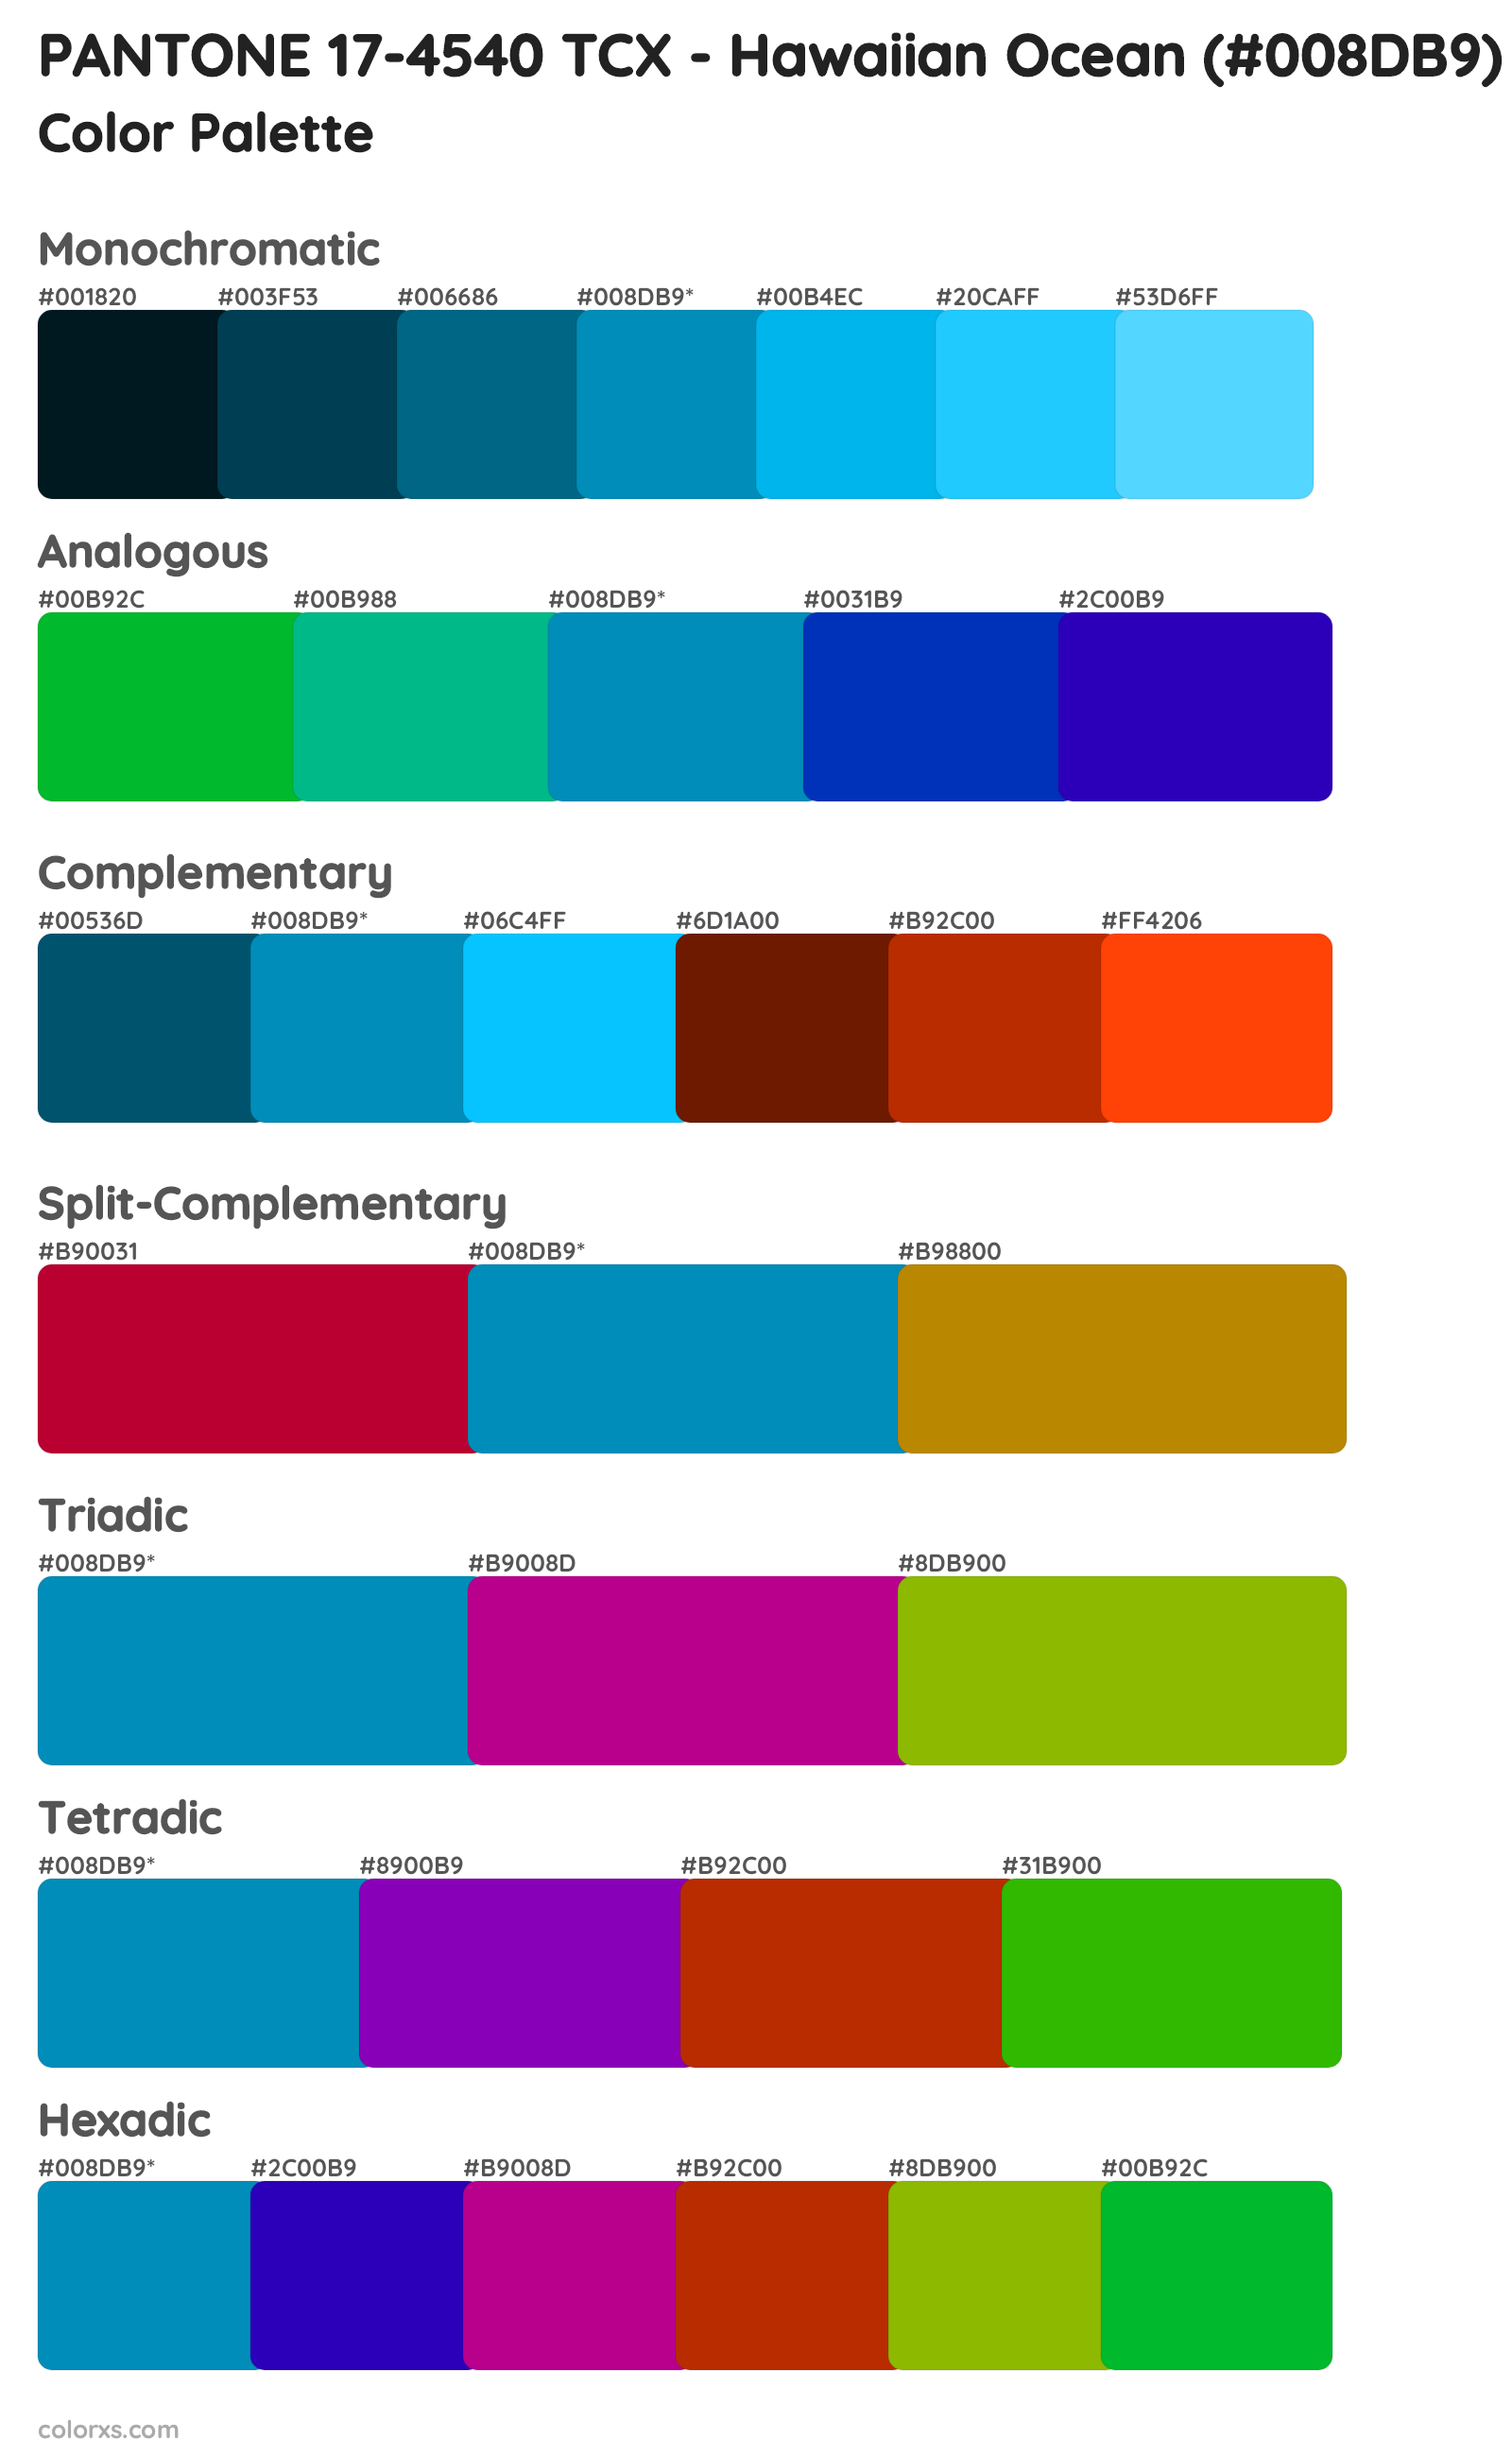 PANTONE 17-4540 TCX - Hawaiian Ocean Color Scheme Palettes